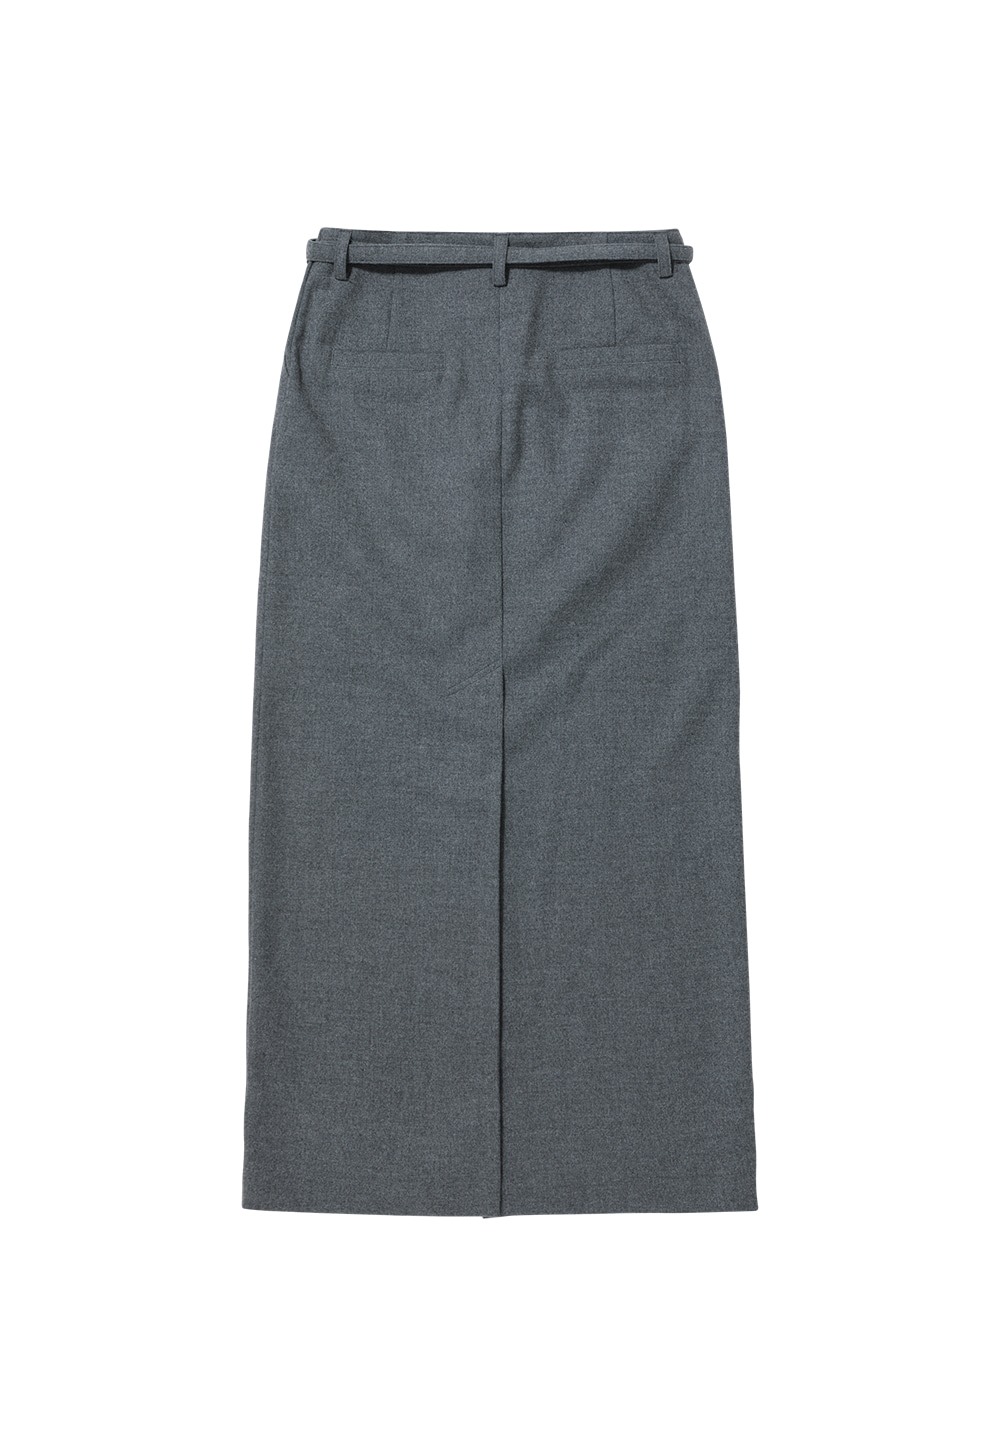 Long&amp;Lean skirt - GREY